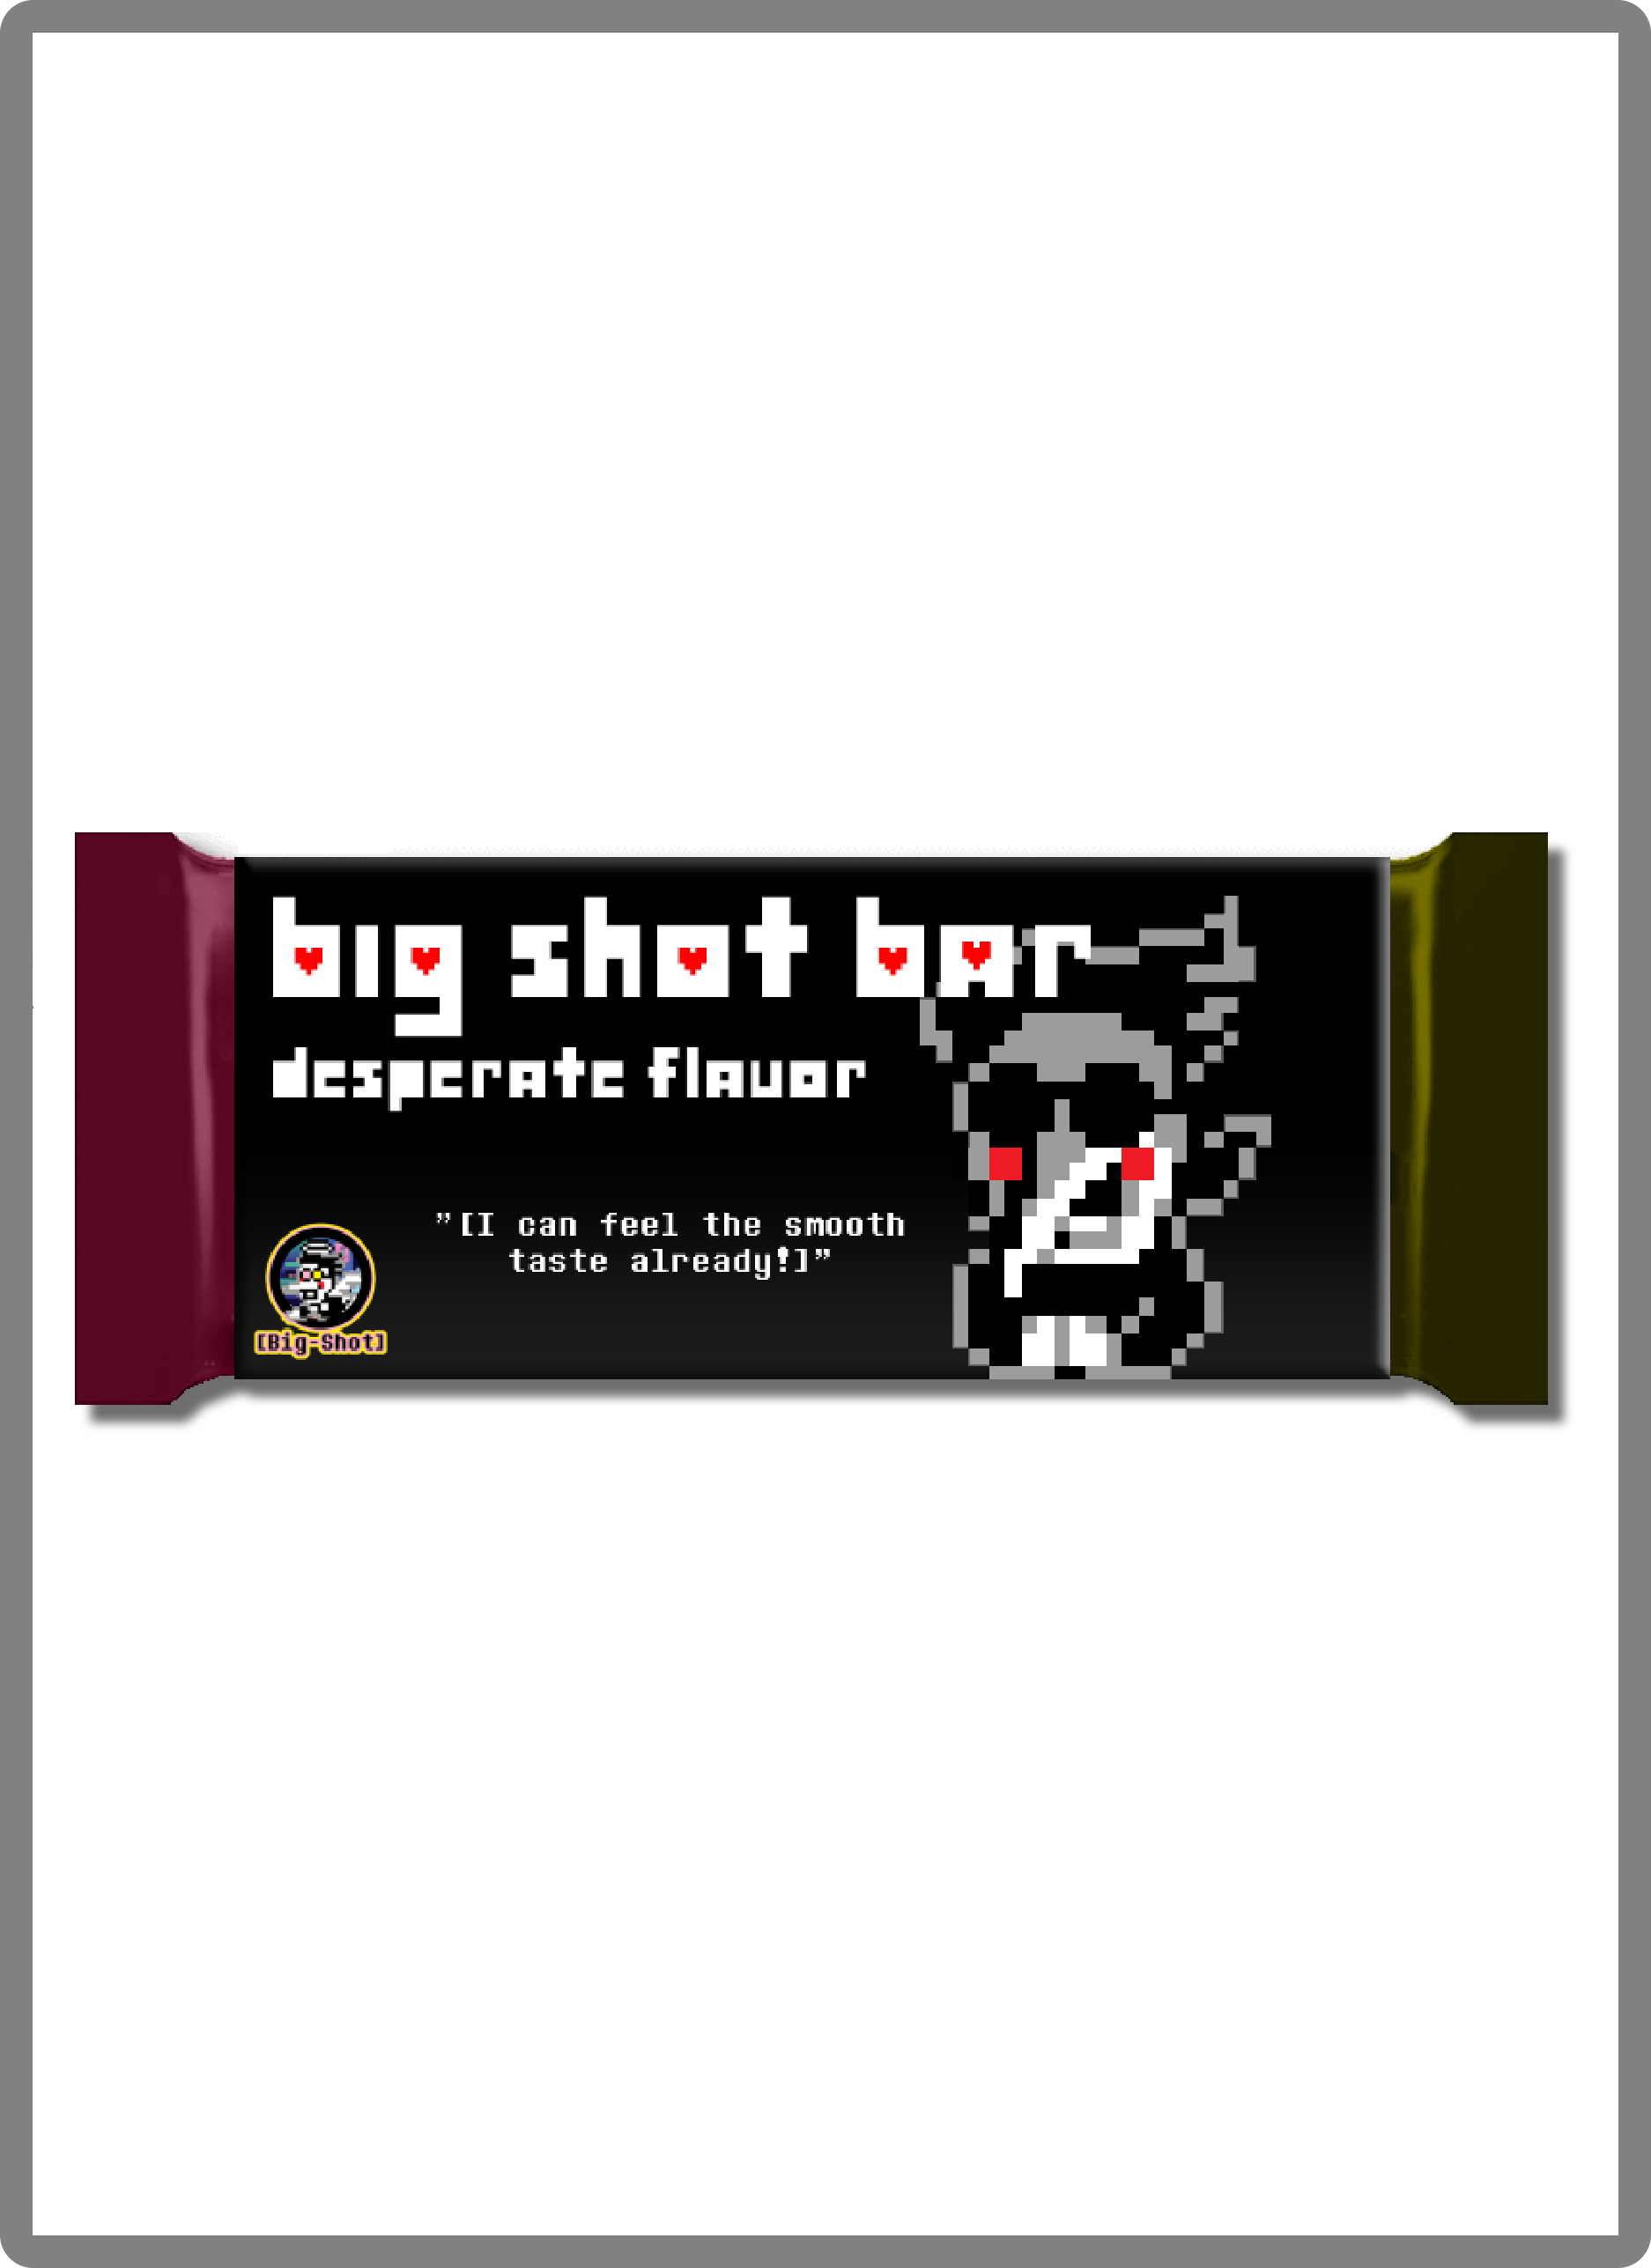 Big Shot Bar